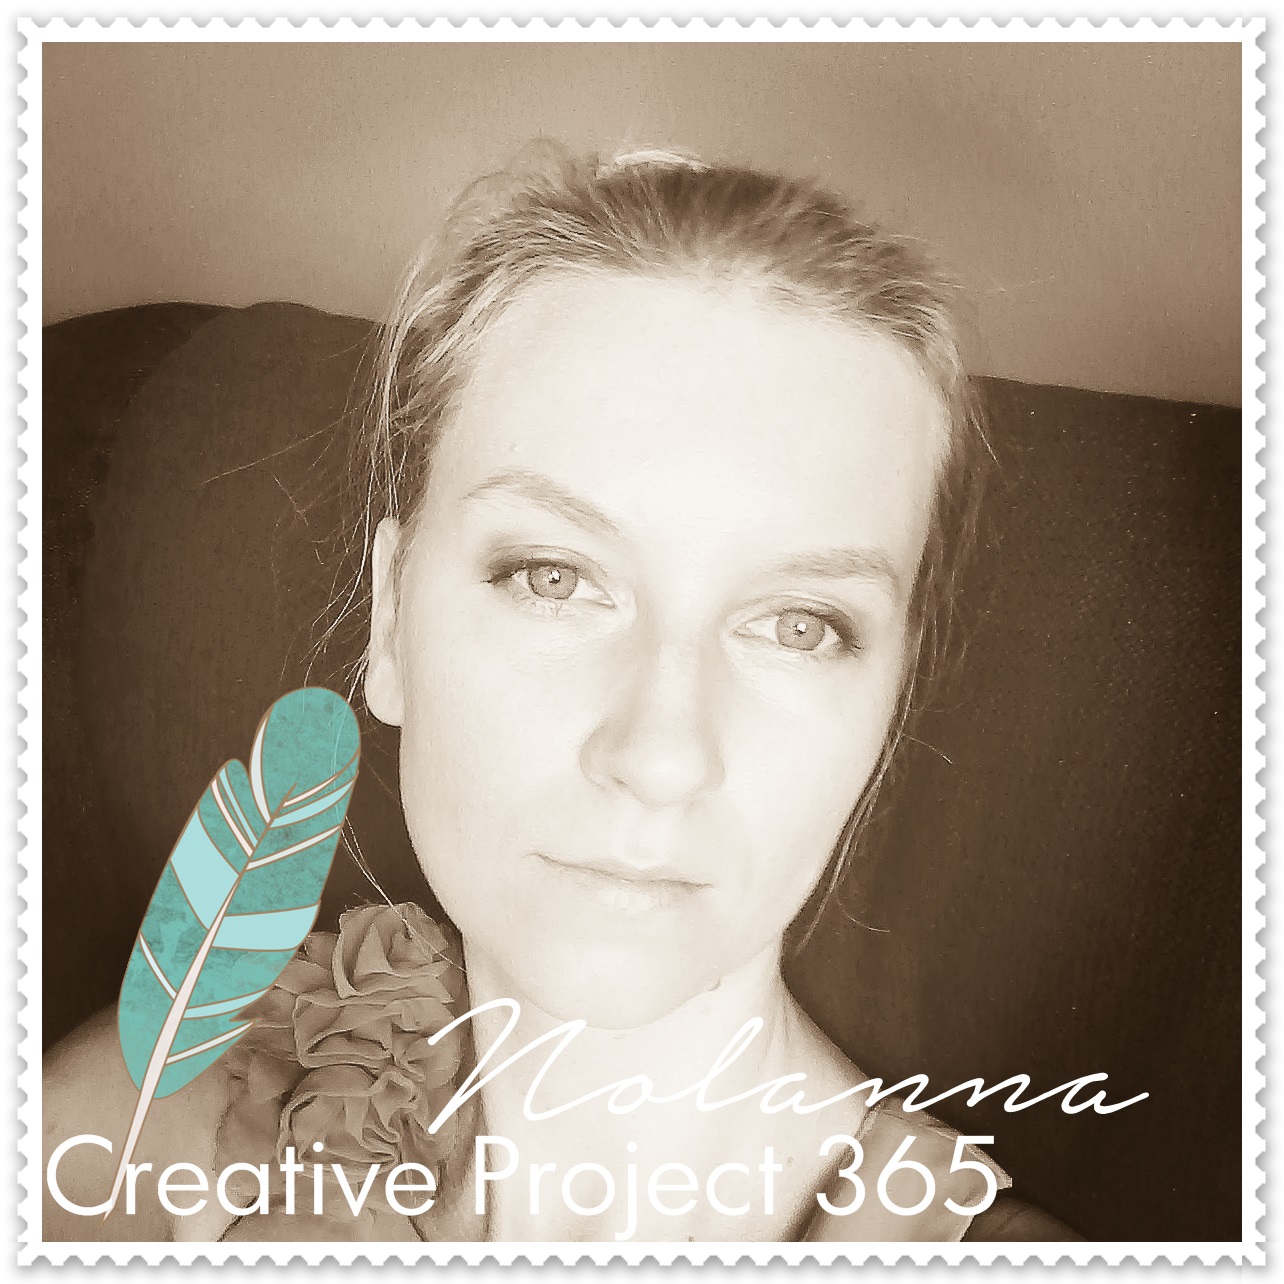 Creative project 365